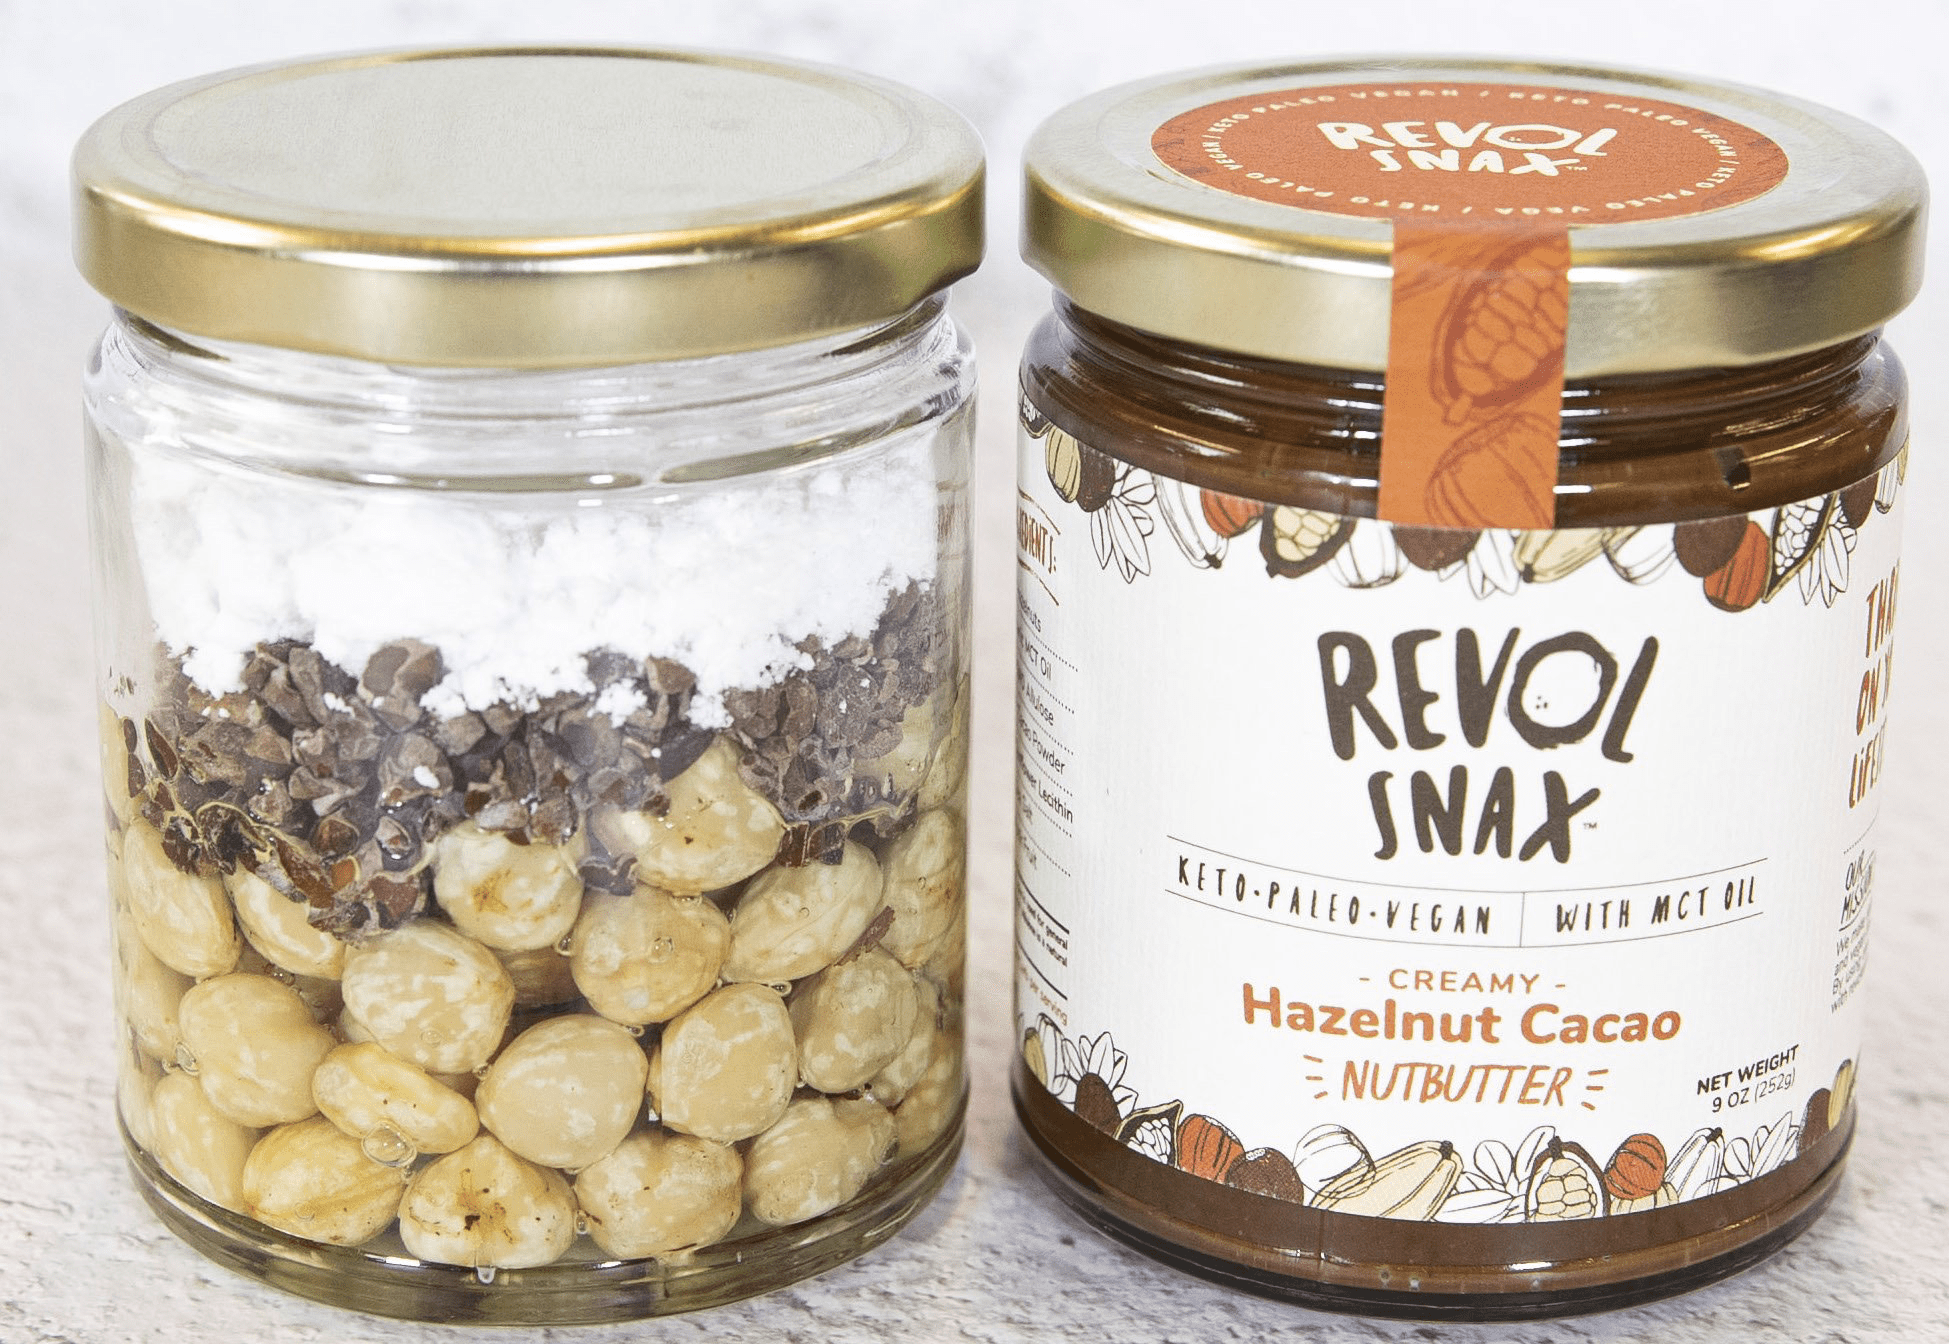 Revol Snax Hazelut Cacao Nut Butter 6 units per case 9.0 oz